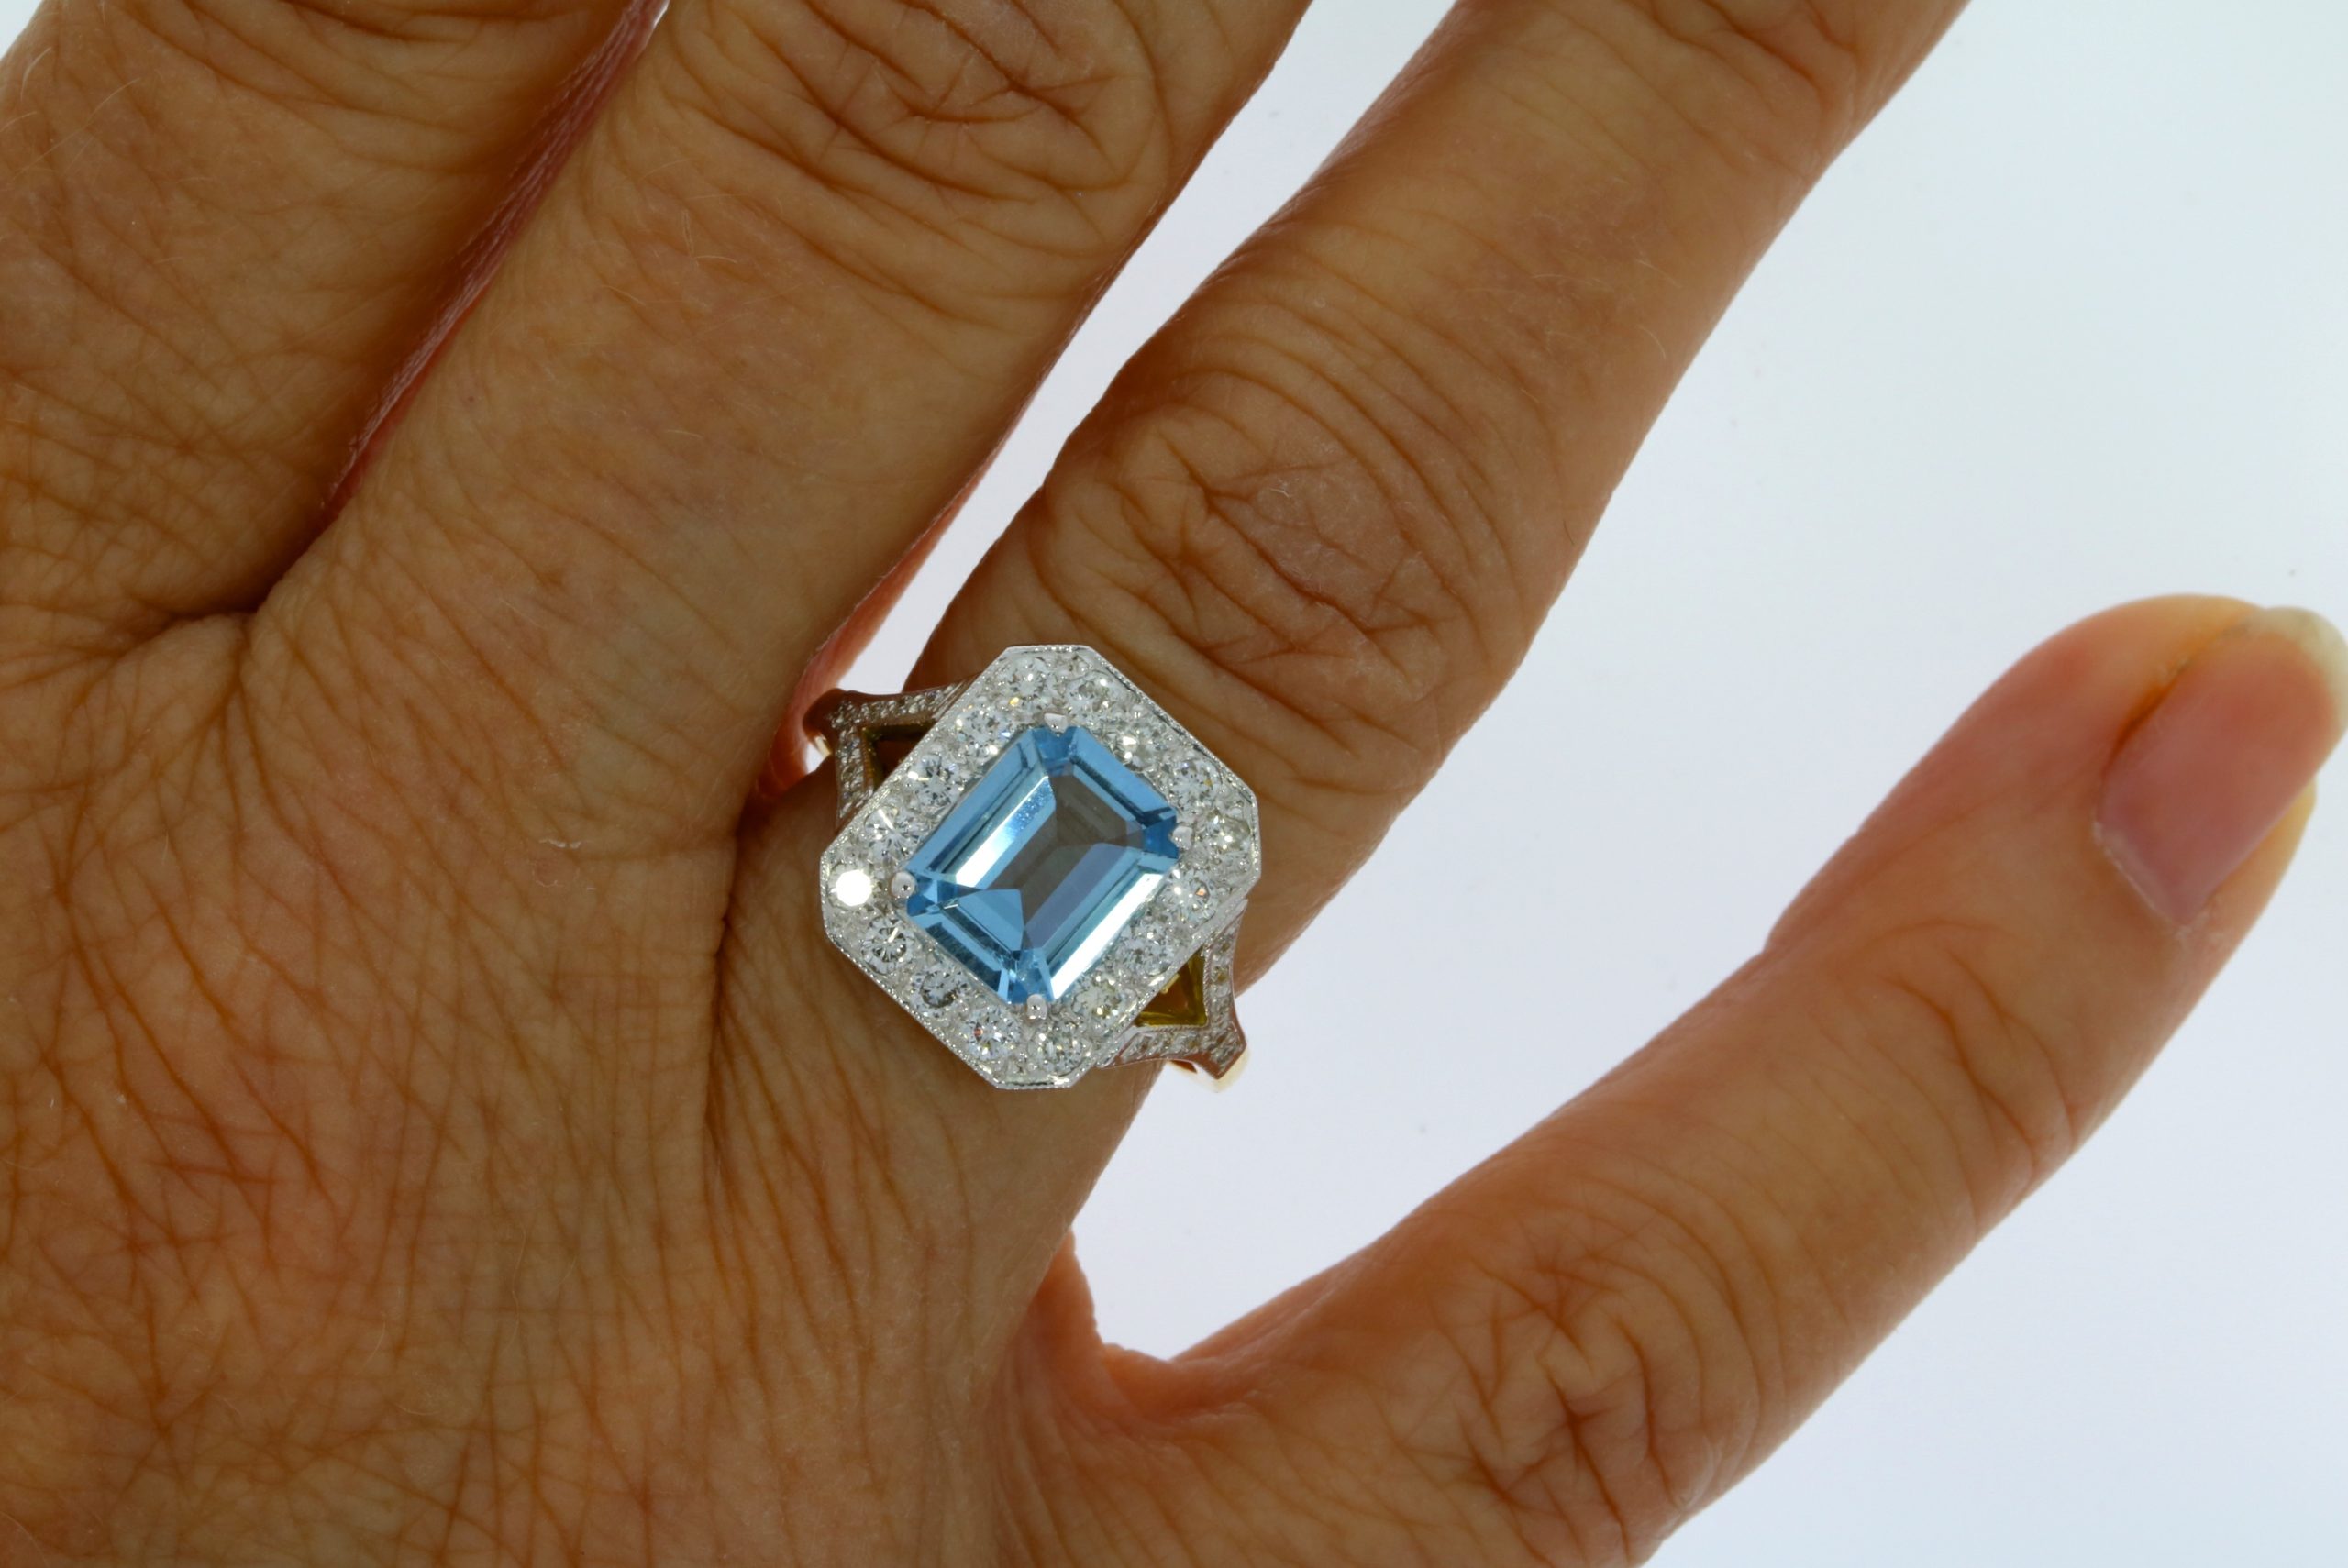 Diamond & Gold Jewellery 18ct Yellow Gold Emerald Cut Aquamarine & Diamond Cluster Ring